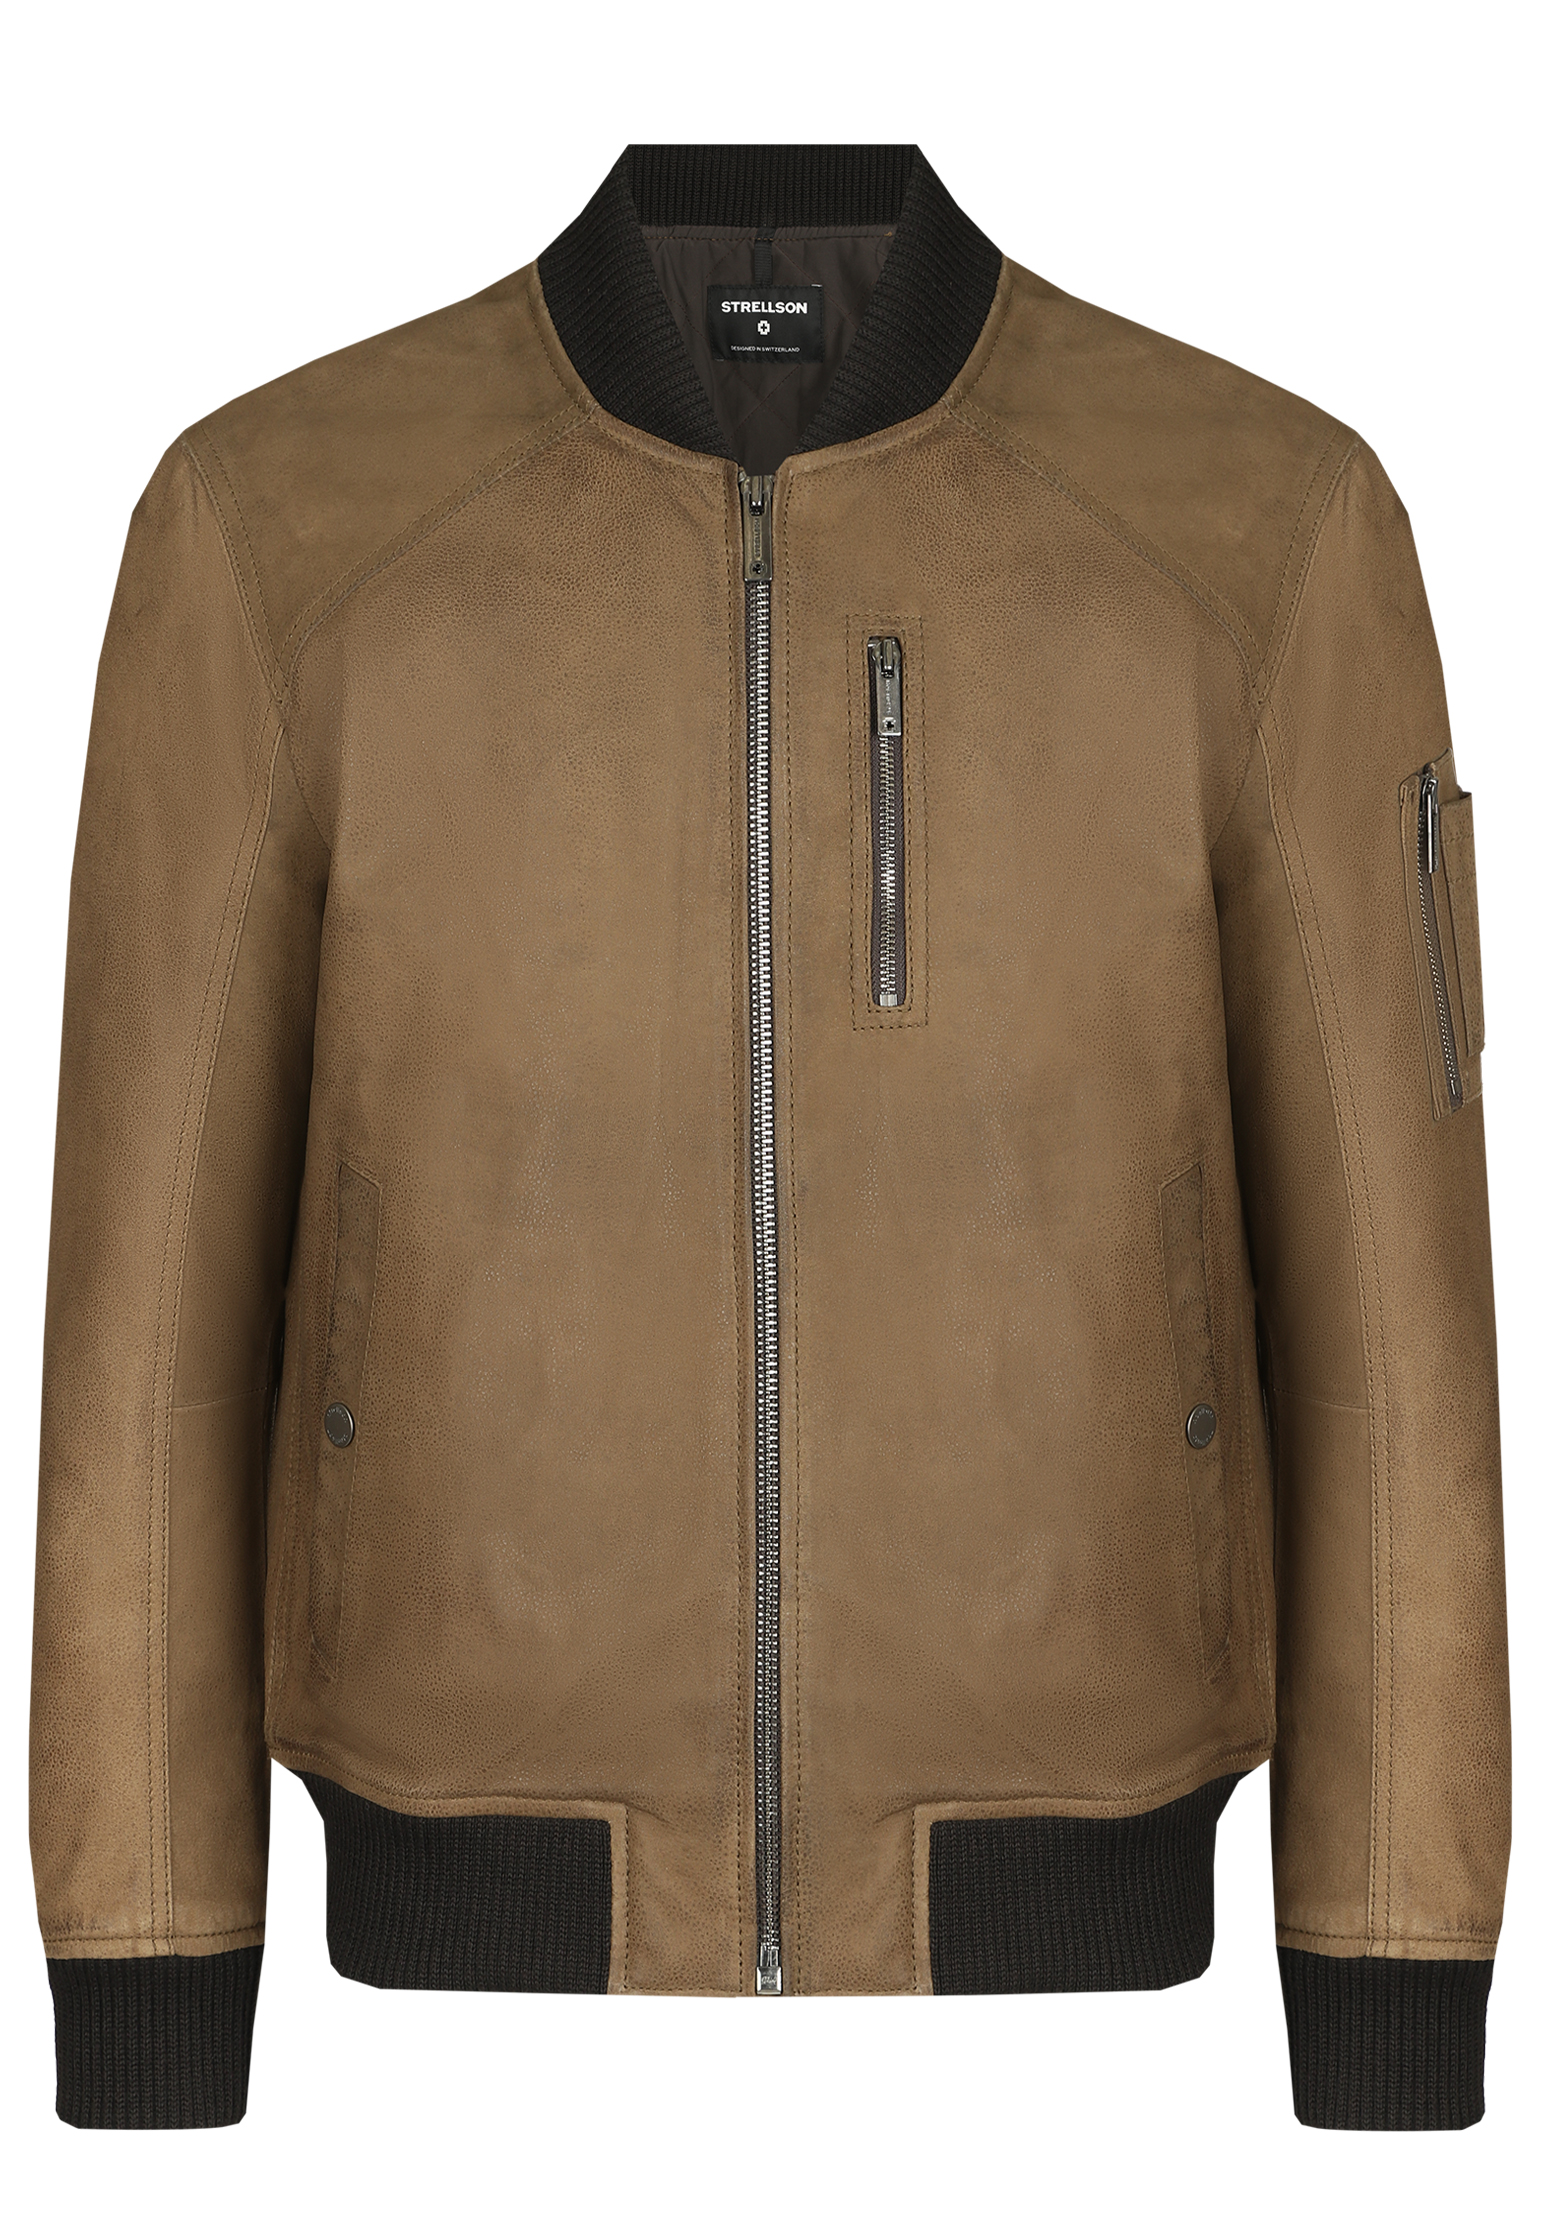 Куртка STRELLSON Коричневый, размер 50 153140 - фото 1